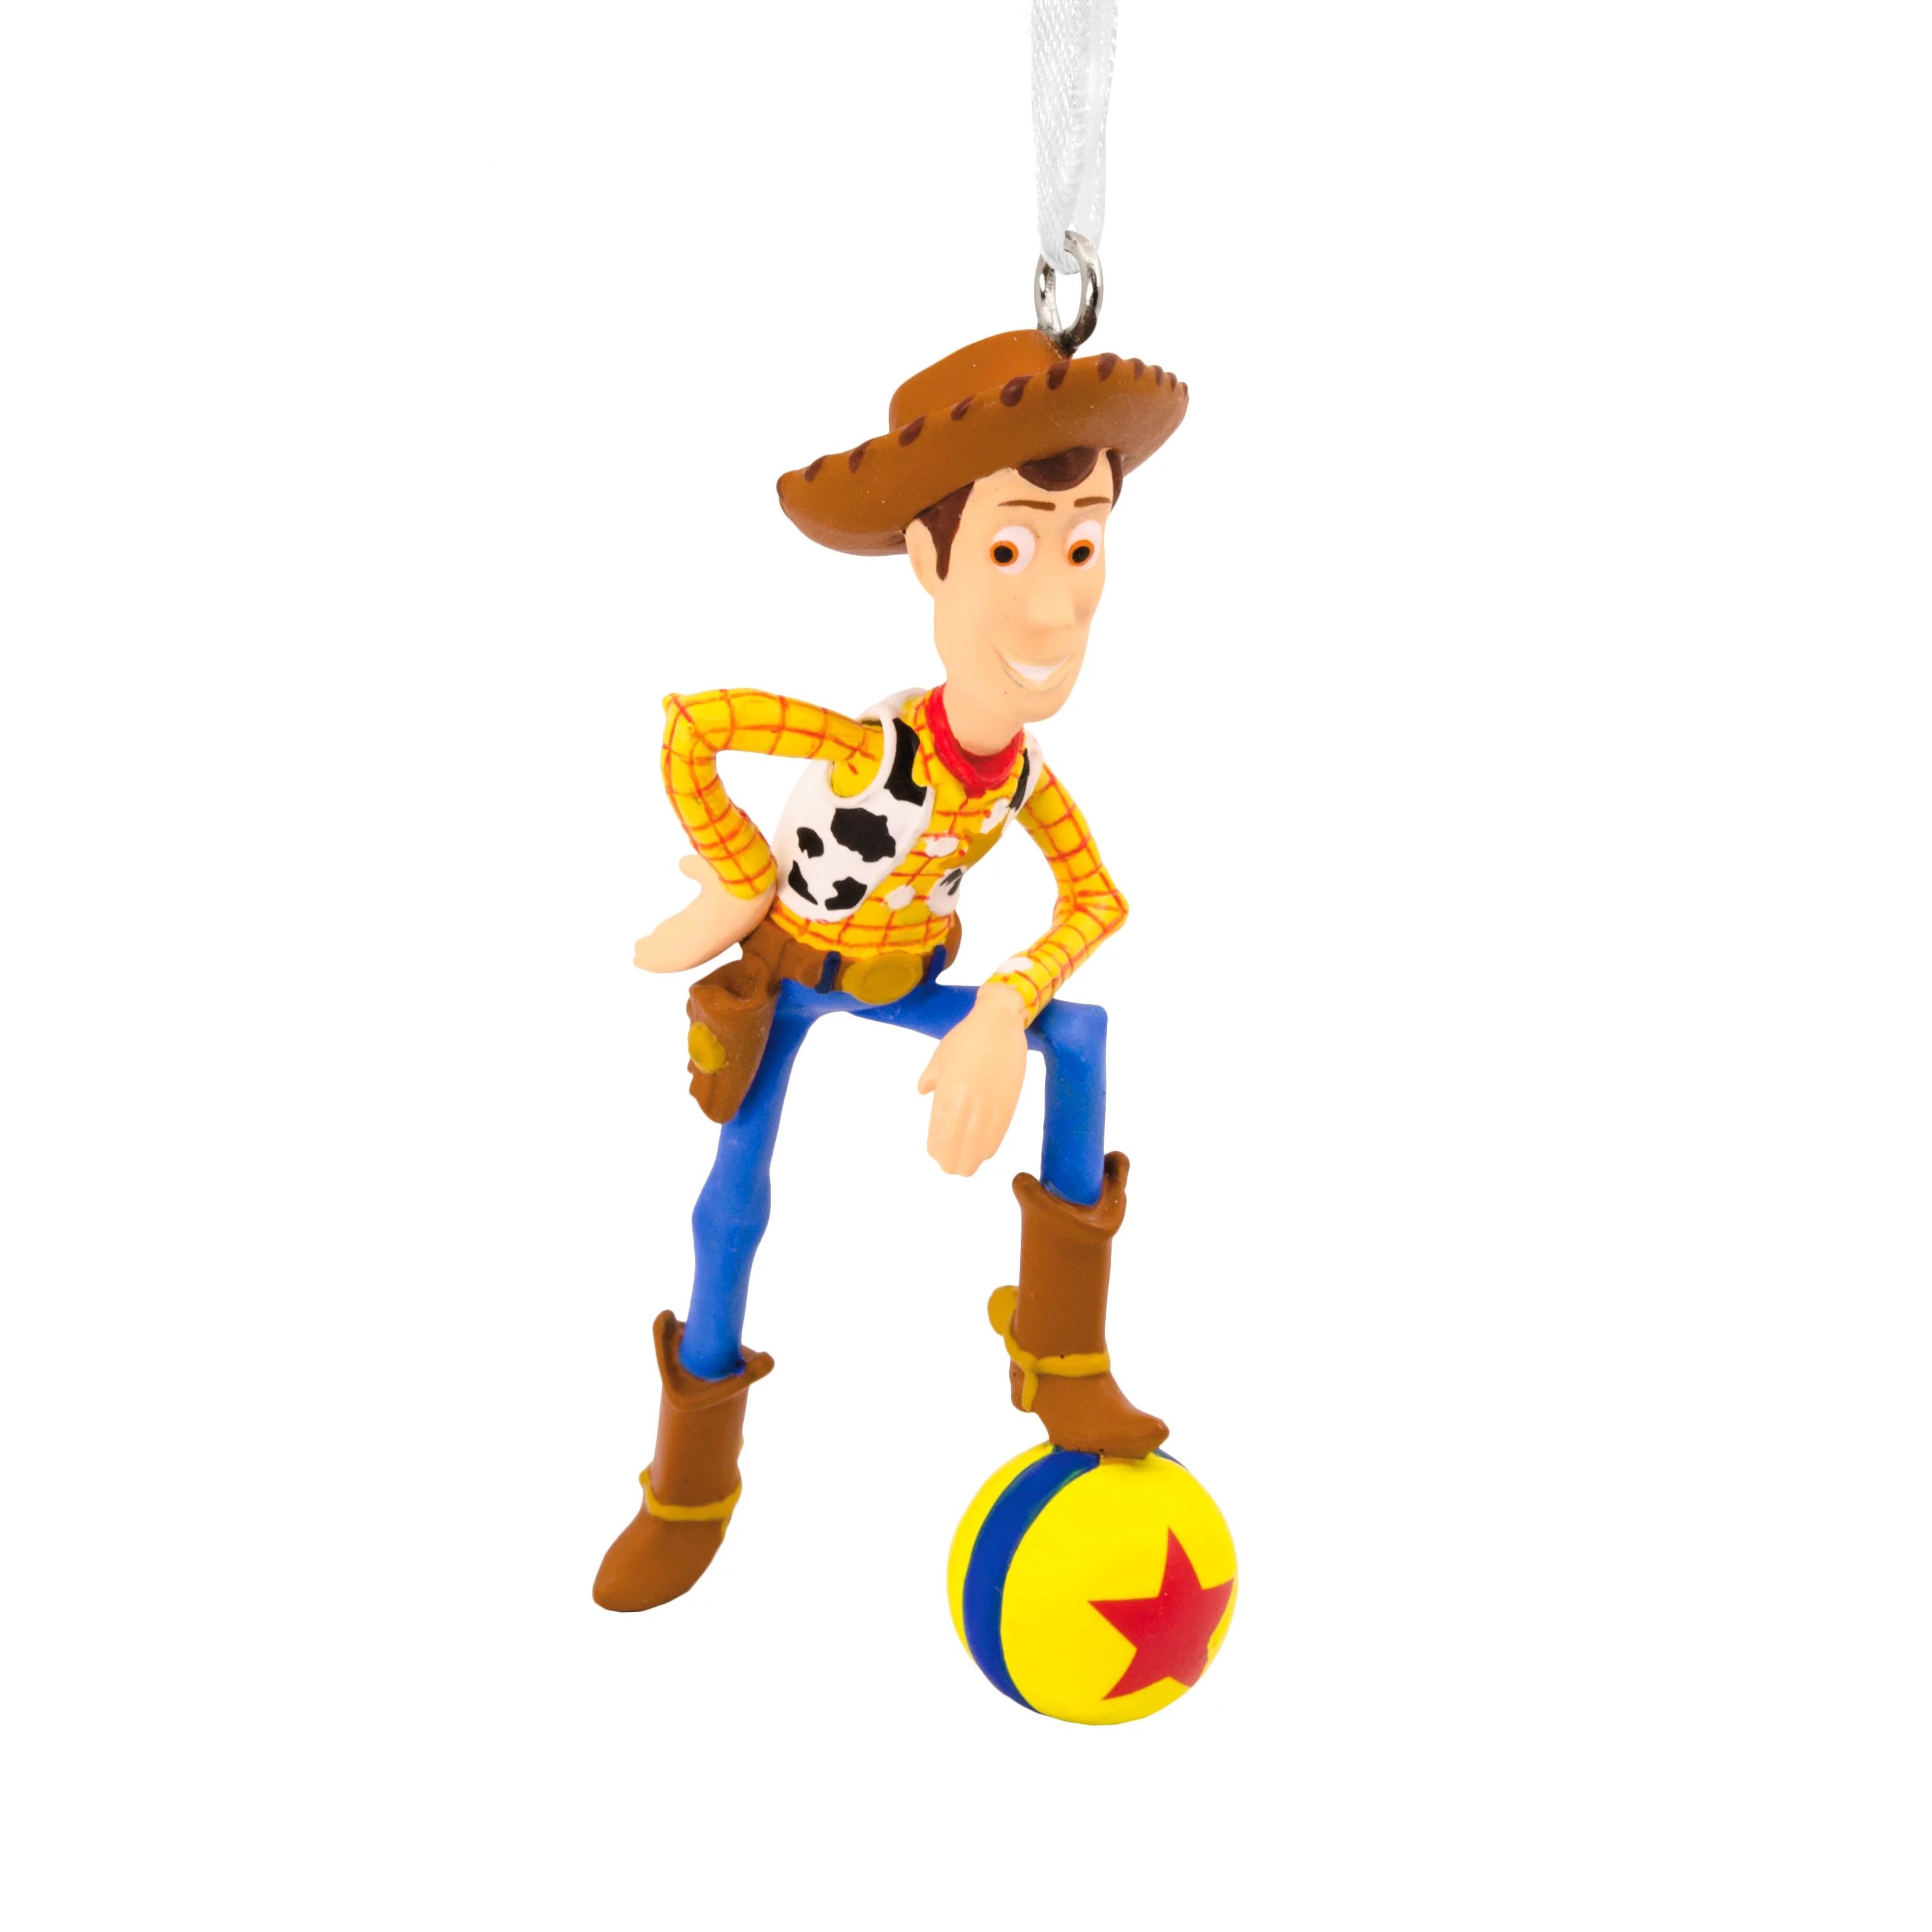 Hallmark Ornament (Disney/Pixar Toy Story Woody) - Walmart.com | Walmart (US)